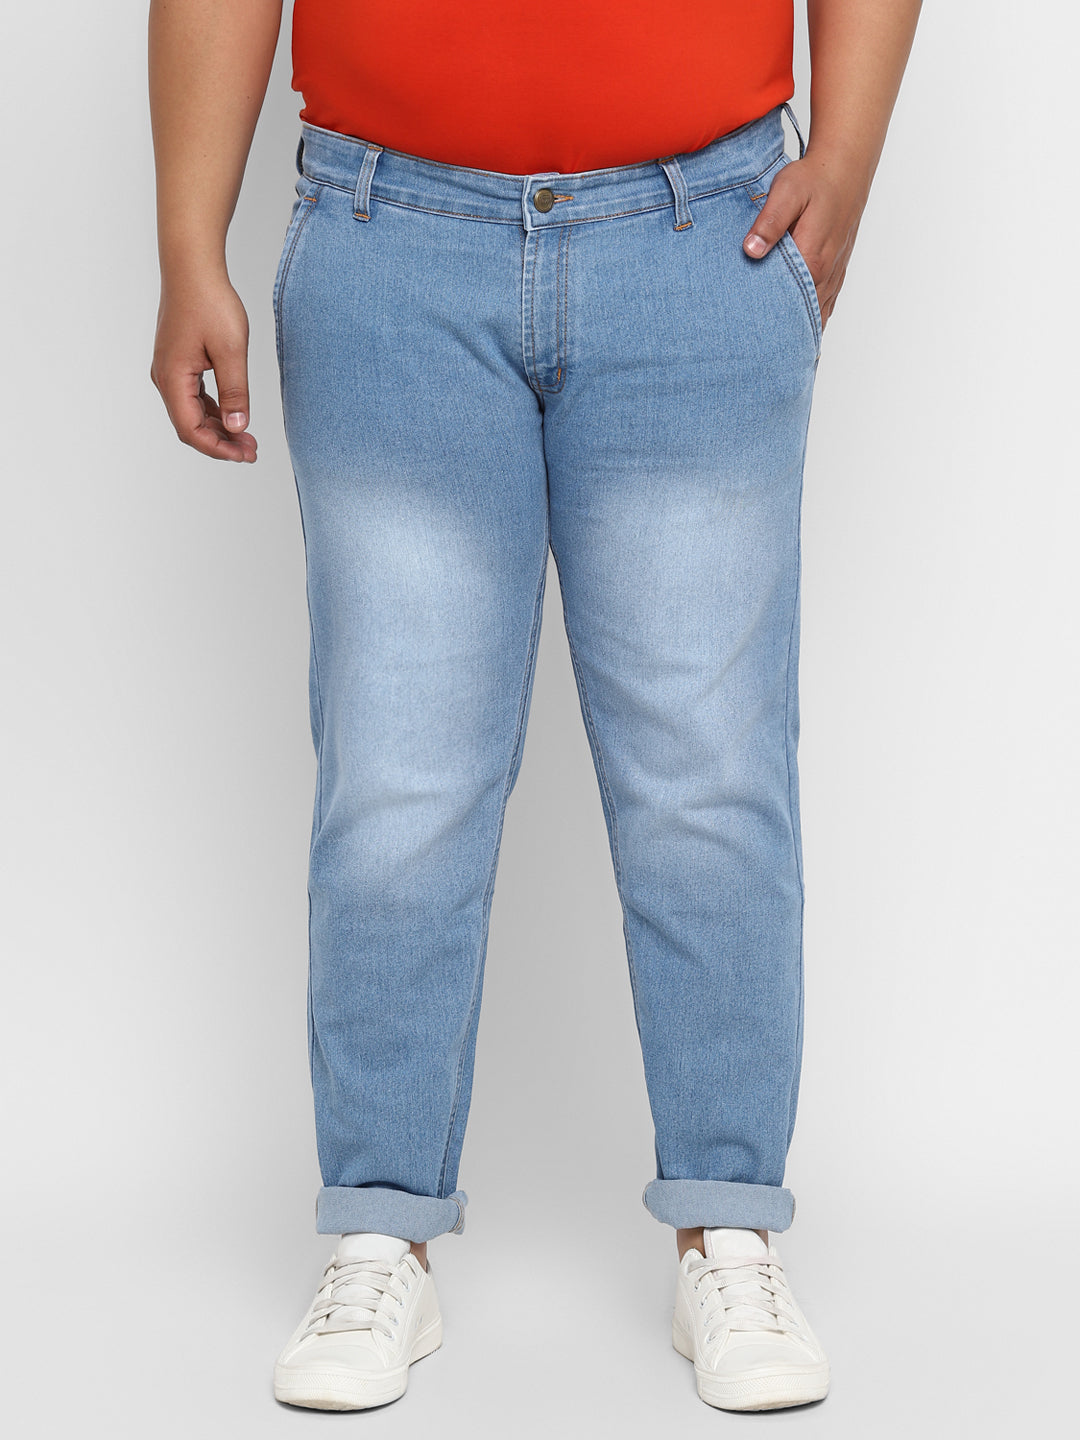 Plus Men's Light Blue Regular Fit Denim Jeans Stretchable